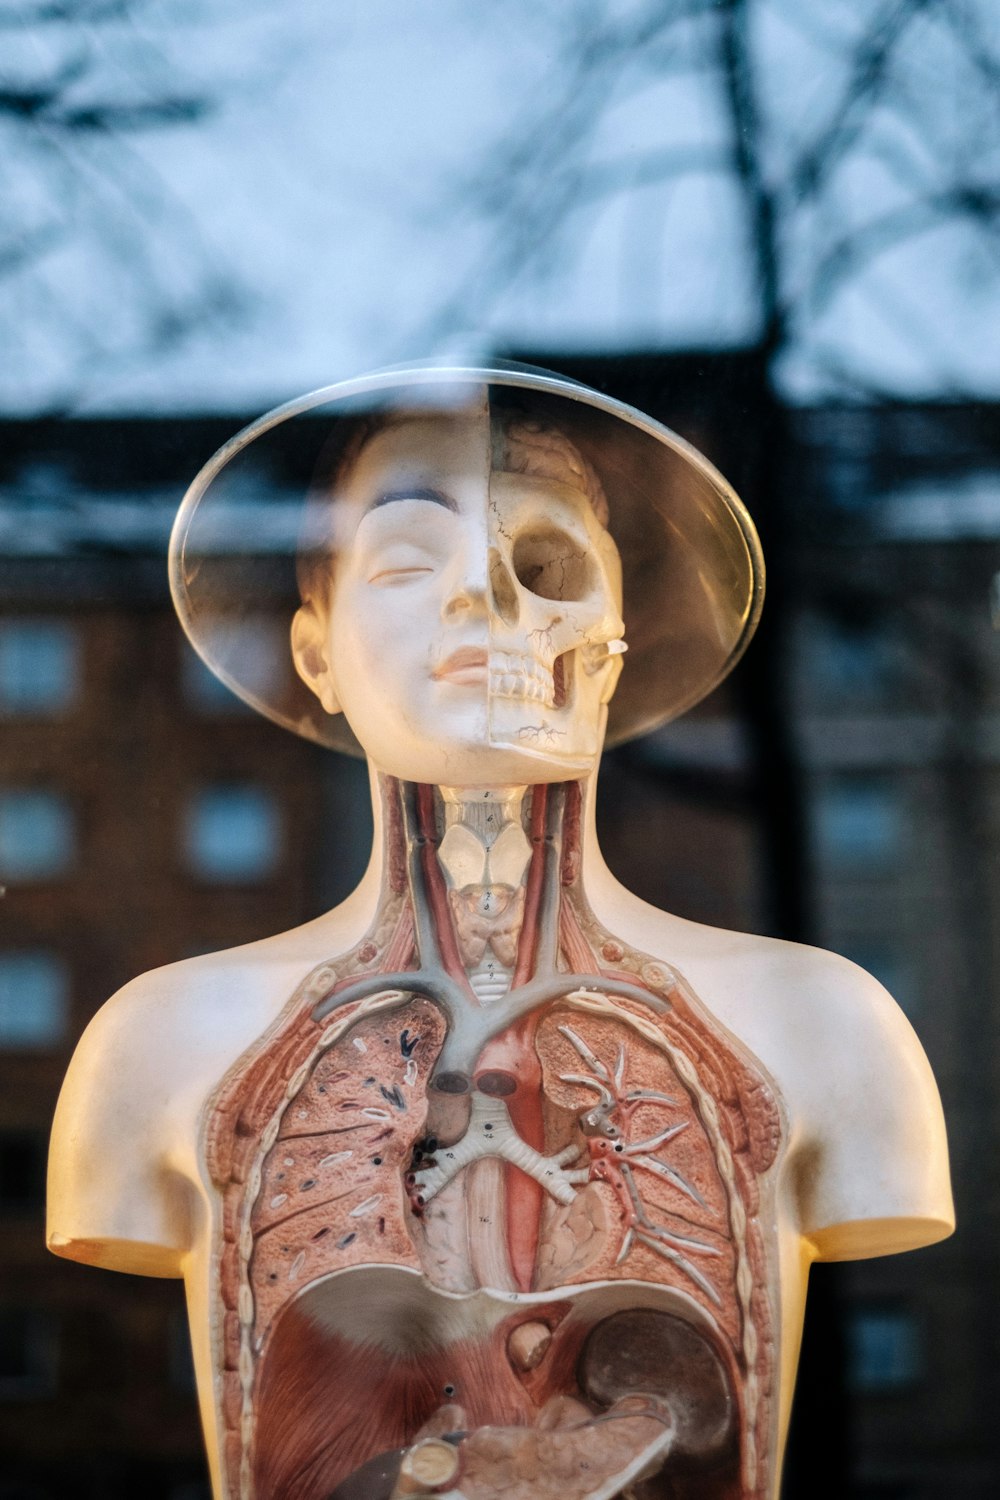 human anatomy display